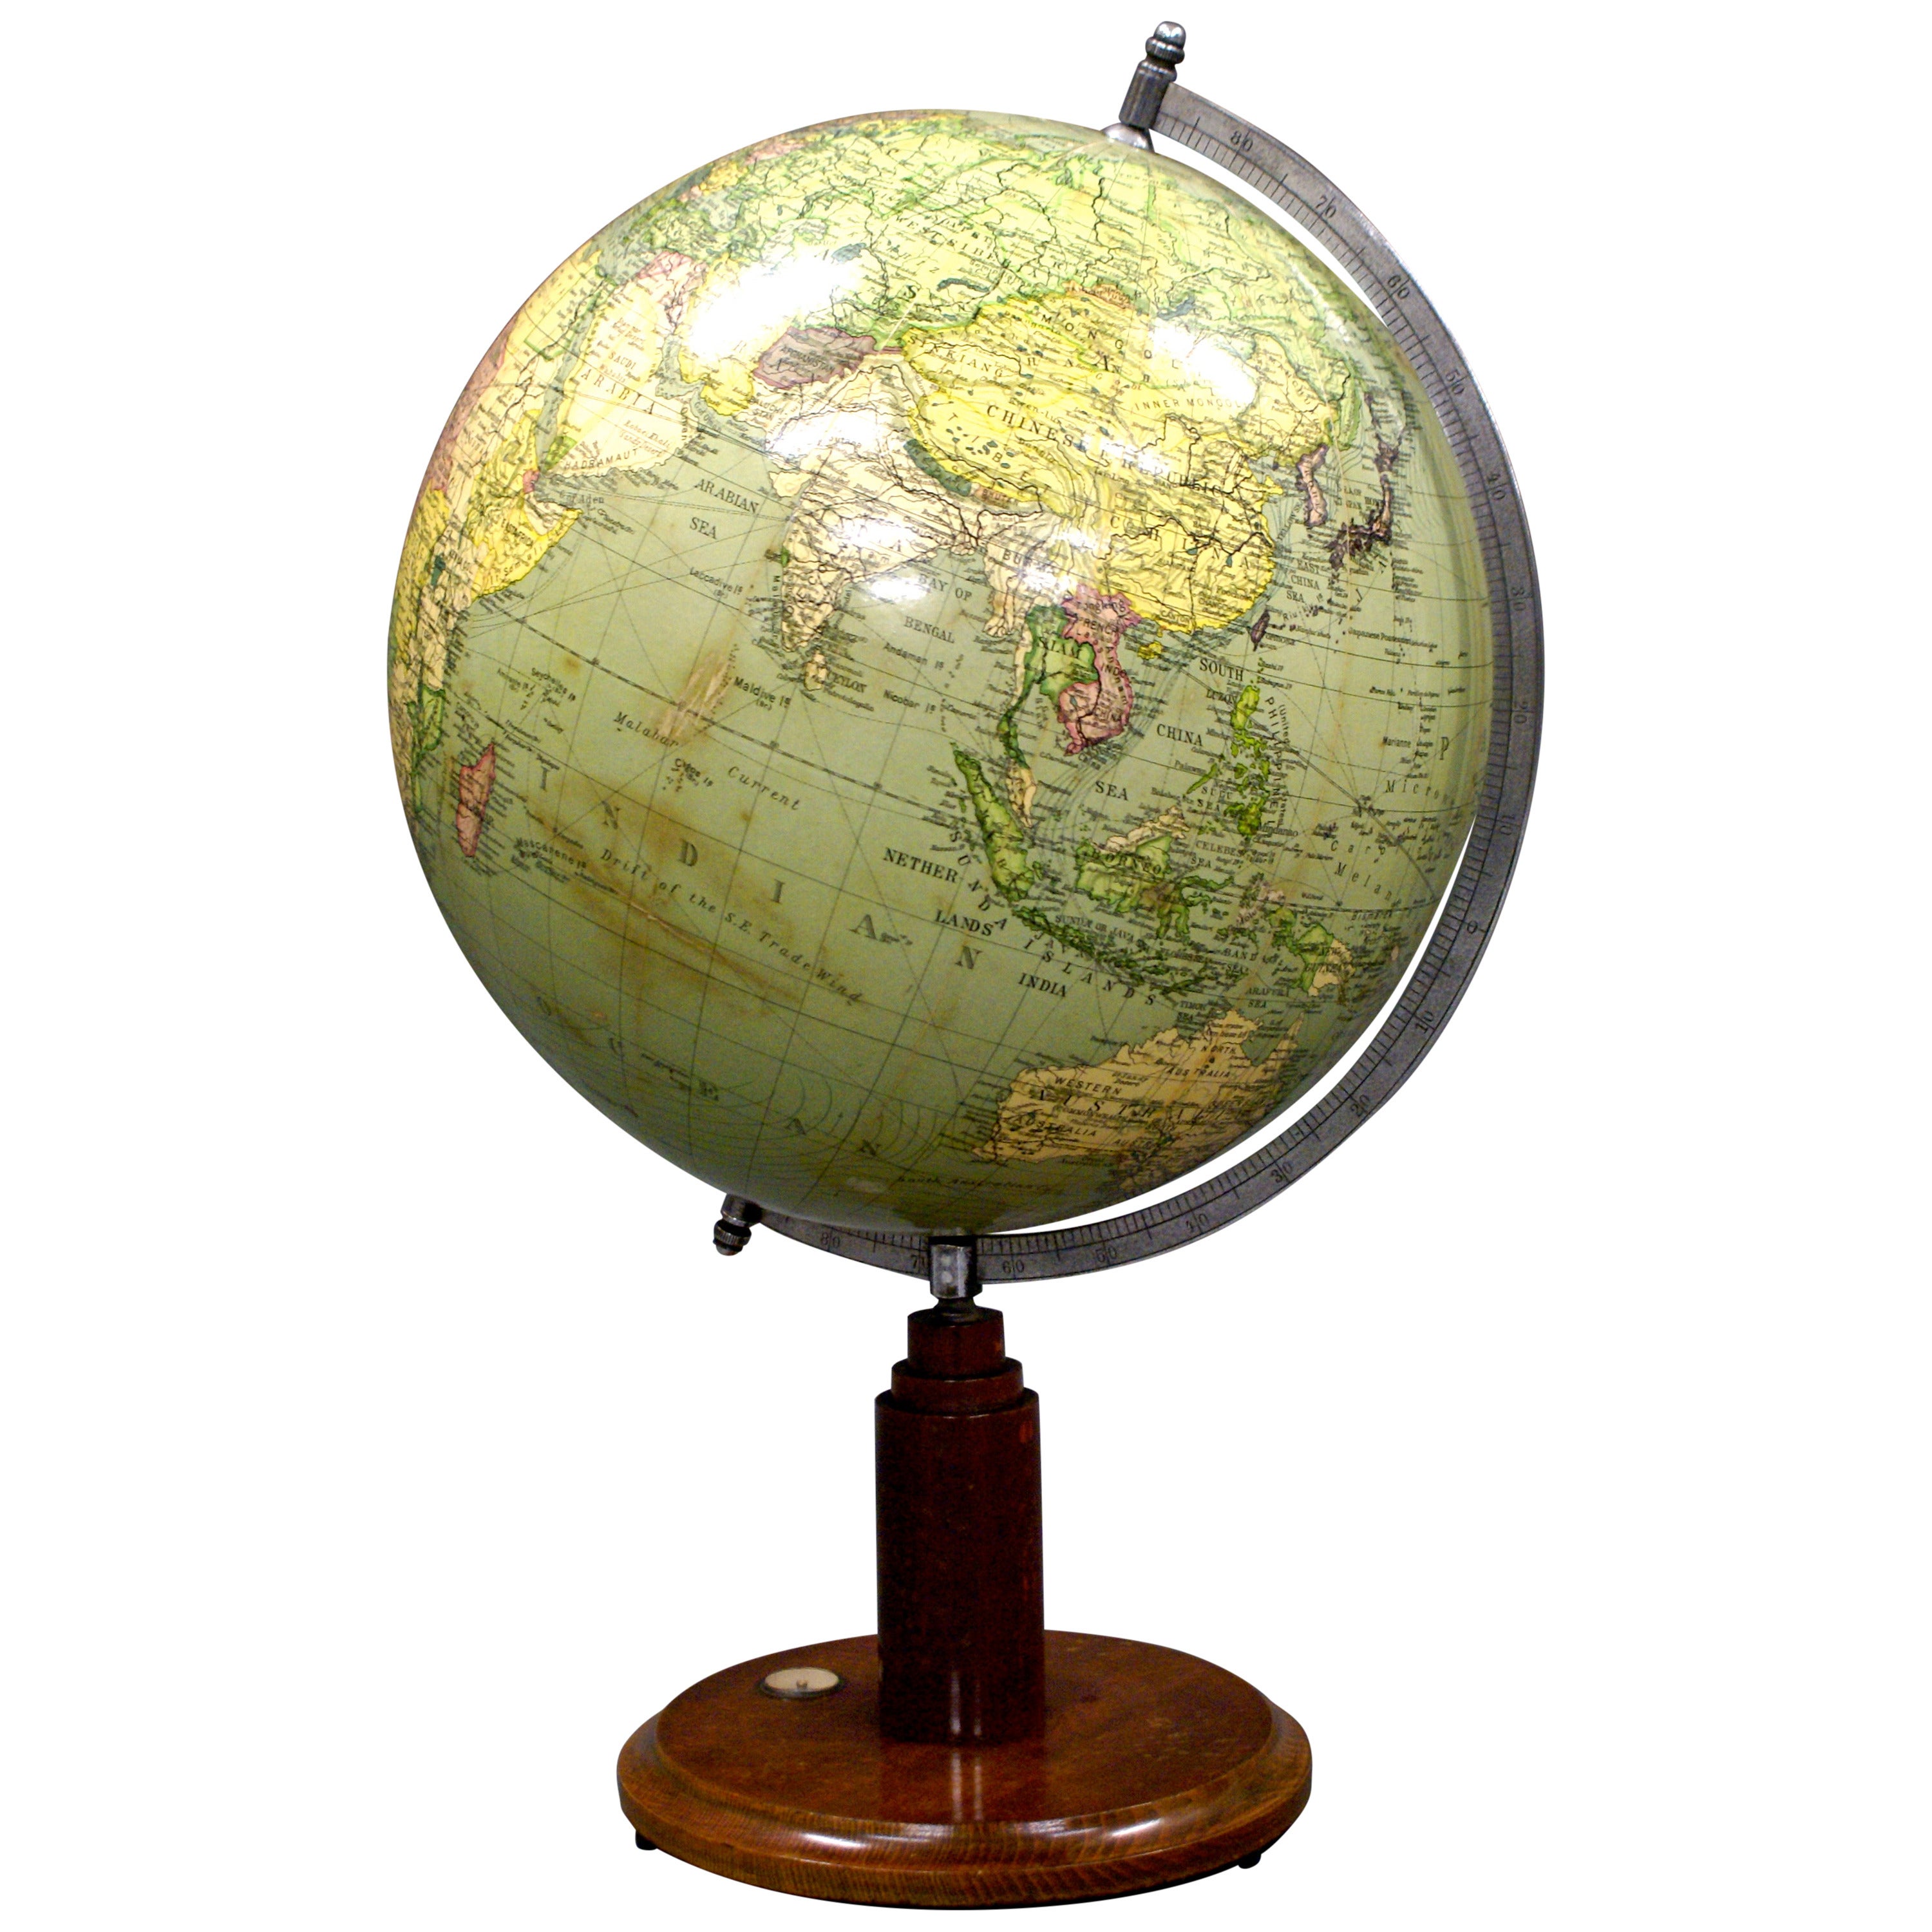 A 1920's/30's, 14" terrestrial table globe